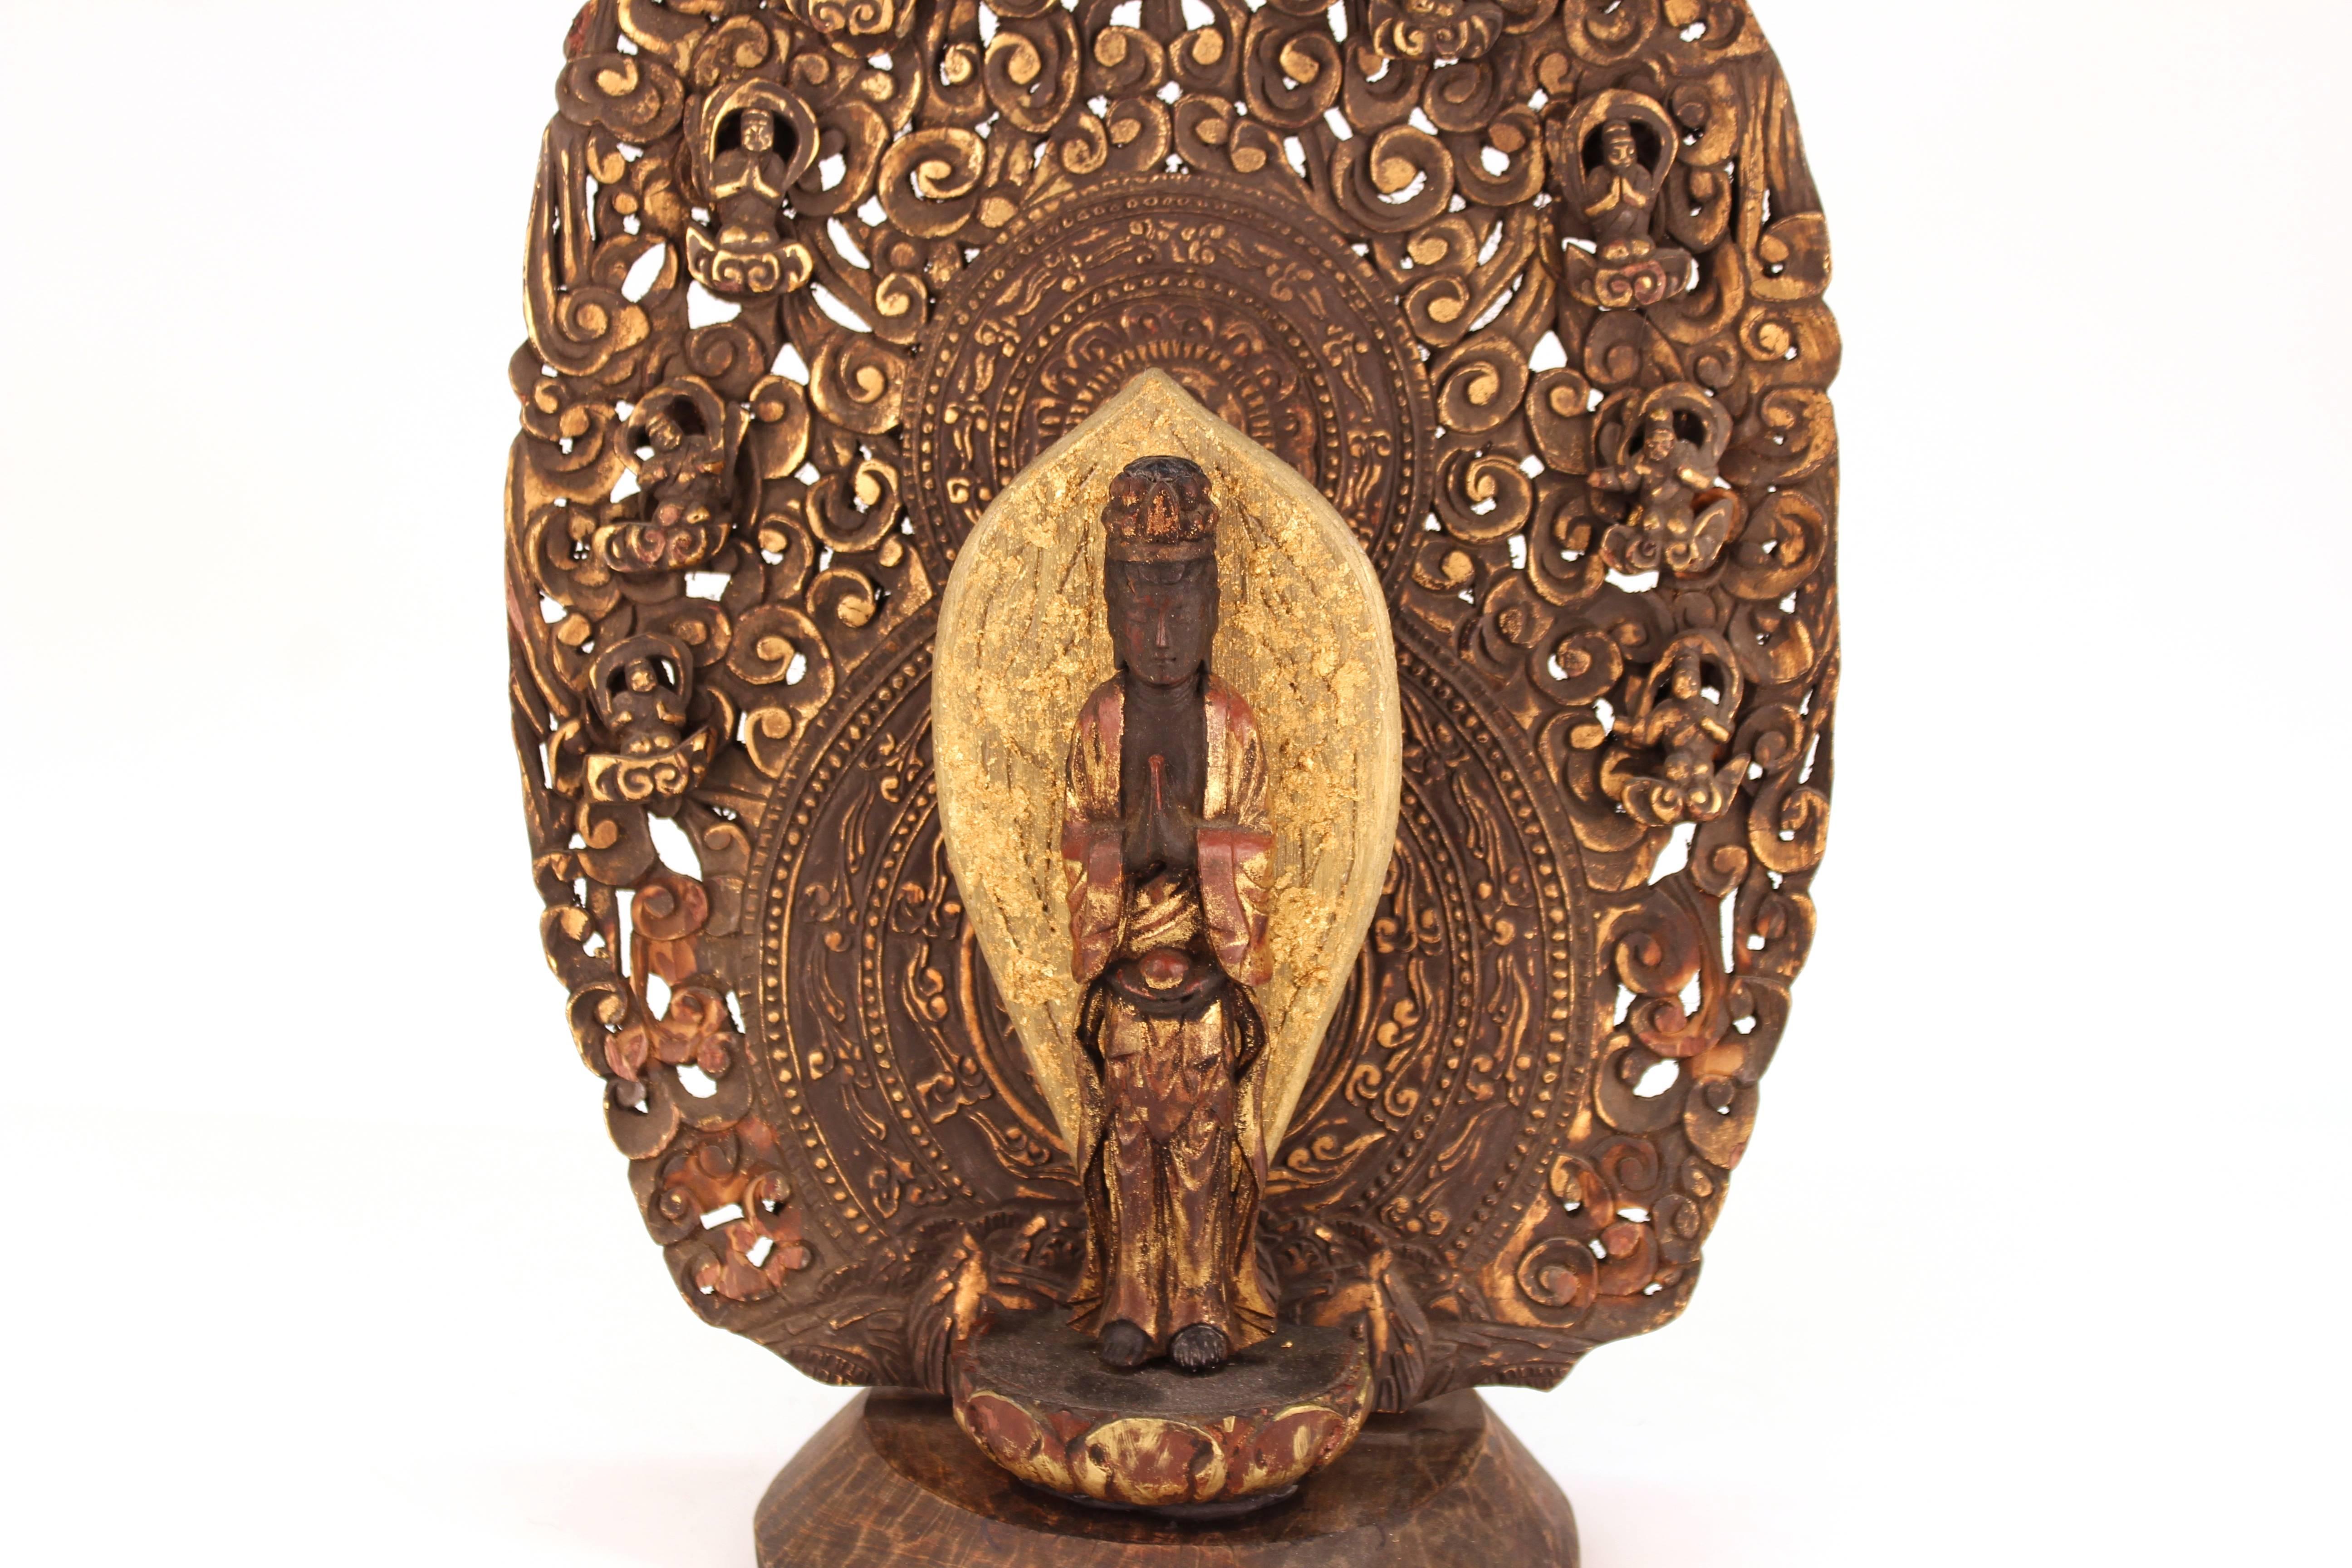 20th Century Japanese Polychrome Wood Buddha in Anjali Mudra